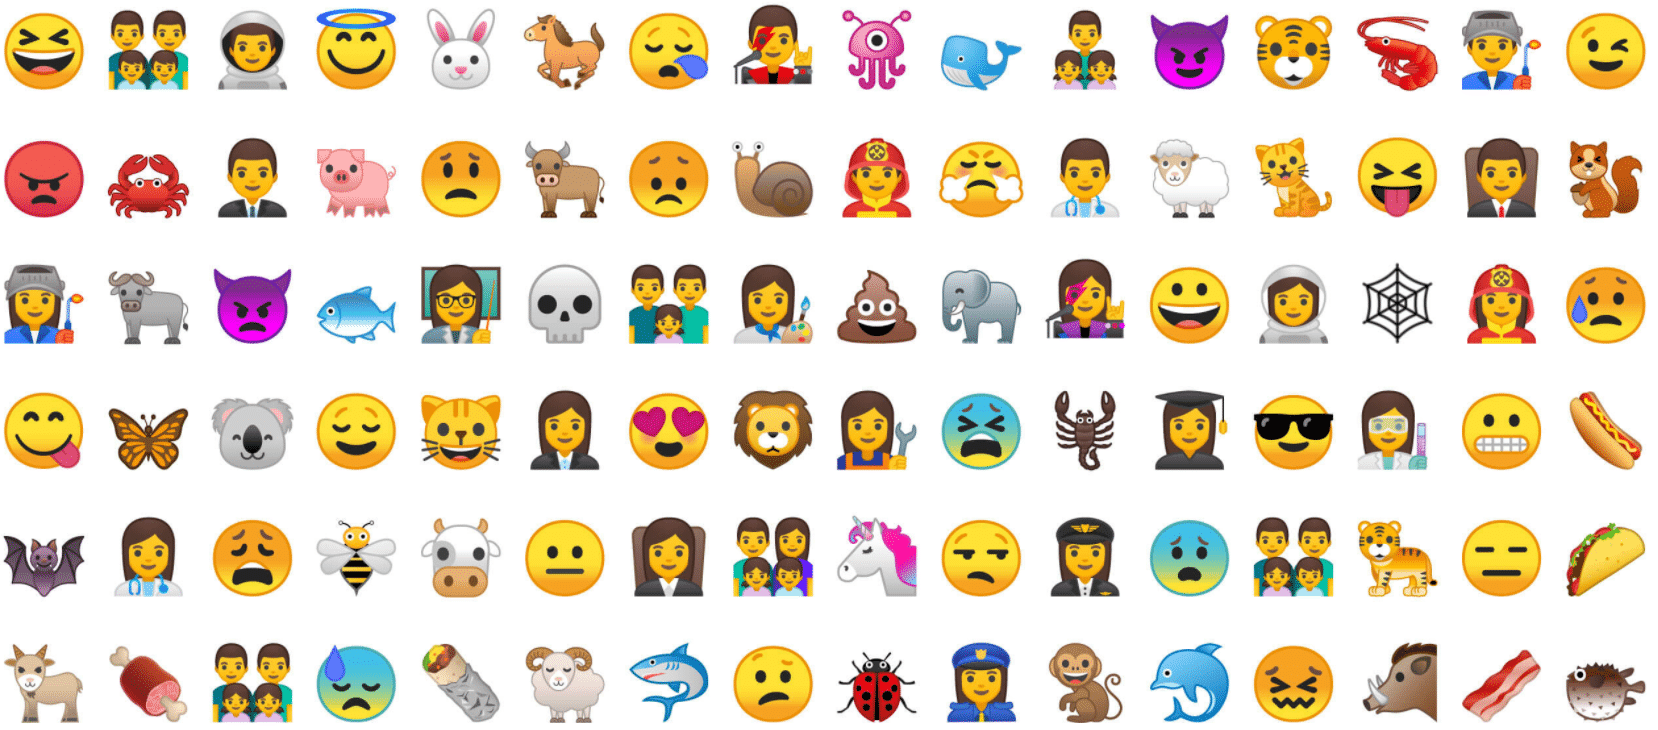 Android 8.0 Oreo promet 60 nouveaux emojis